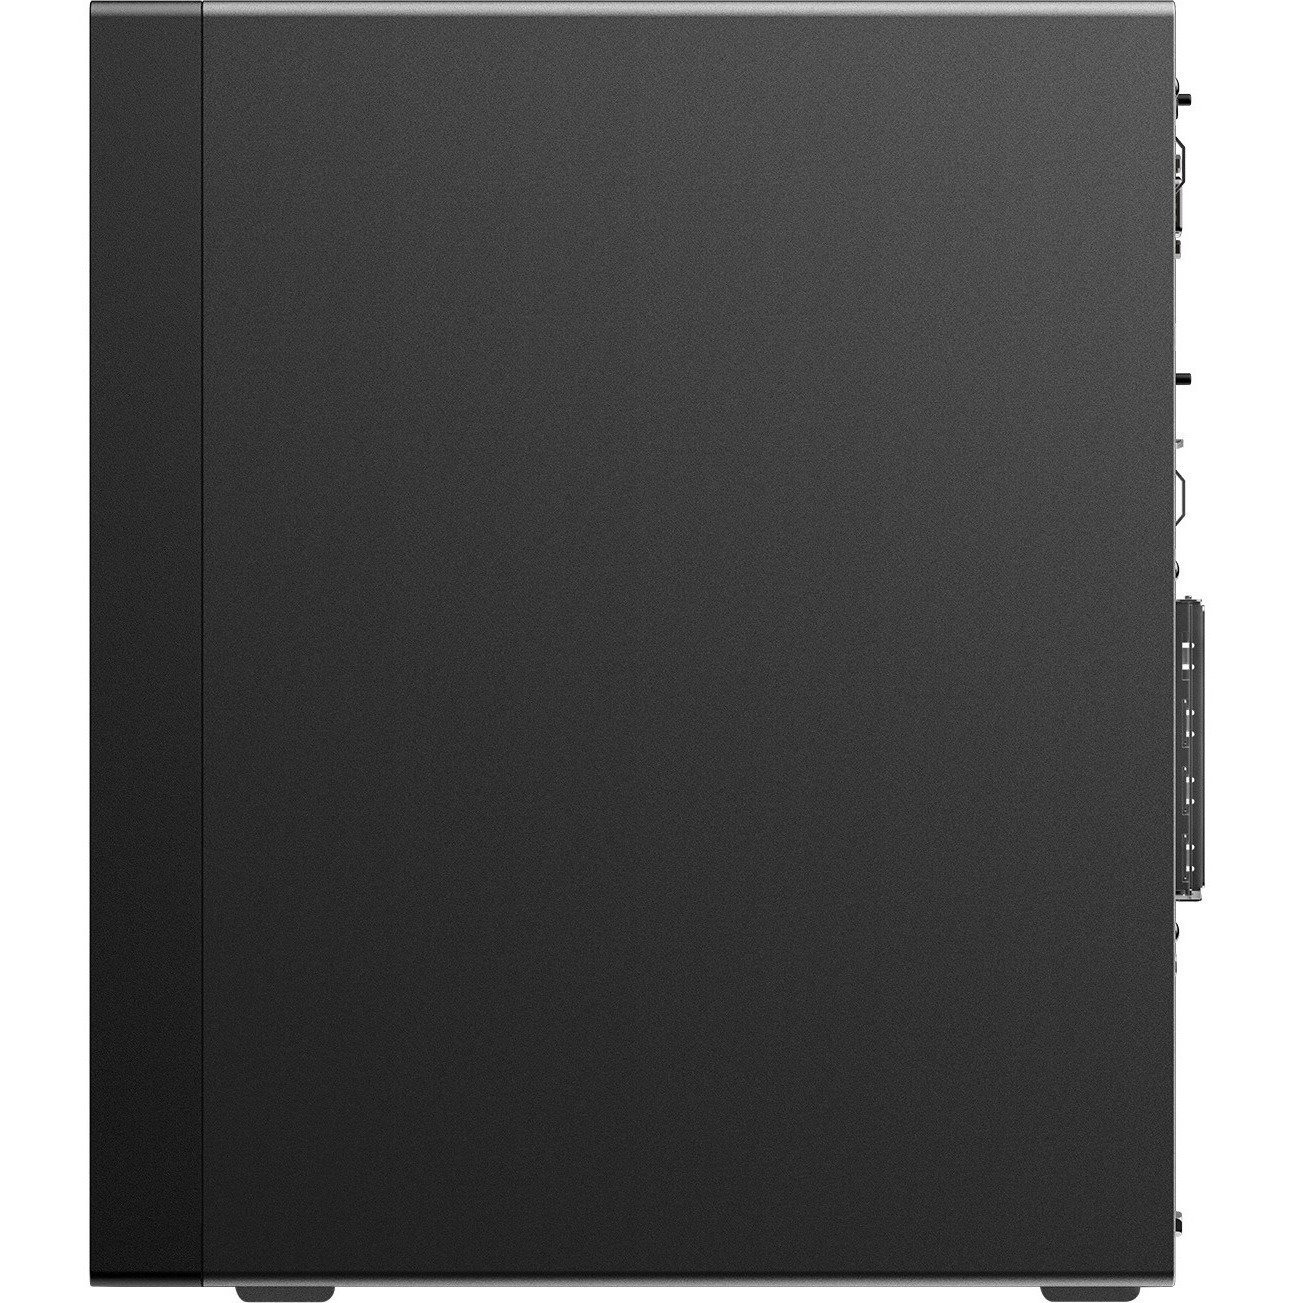 Lenovo ThinkStation P350 30E3009SUS Workstation - 1 x Intel Core i9 11th Gen i9-11900K - 32 GB - 1 TB SSD - Tower - Raven Black